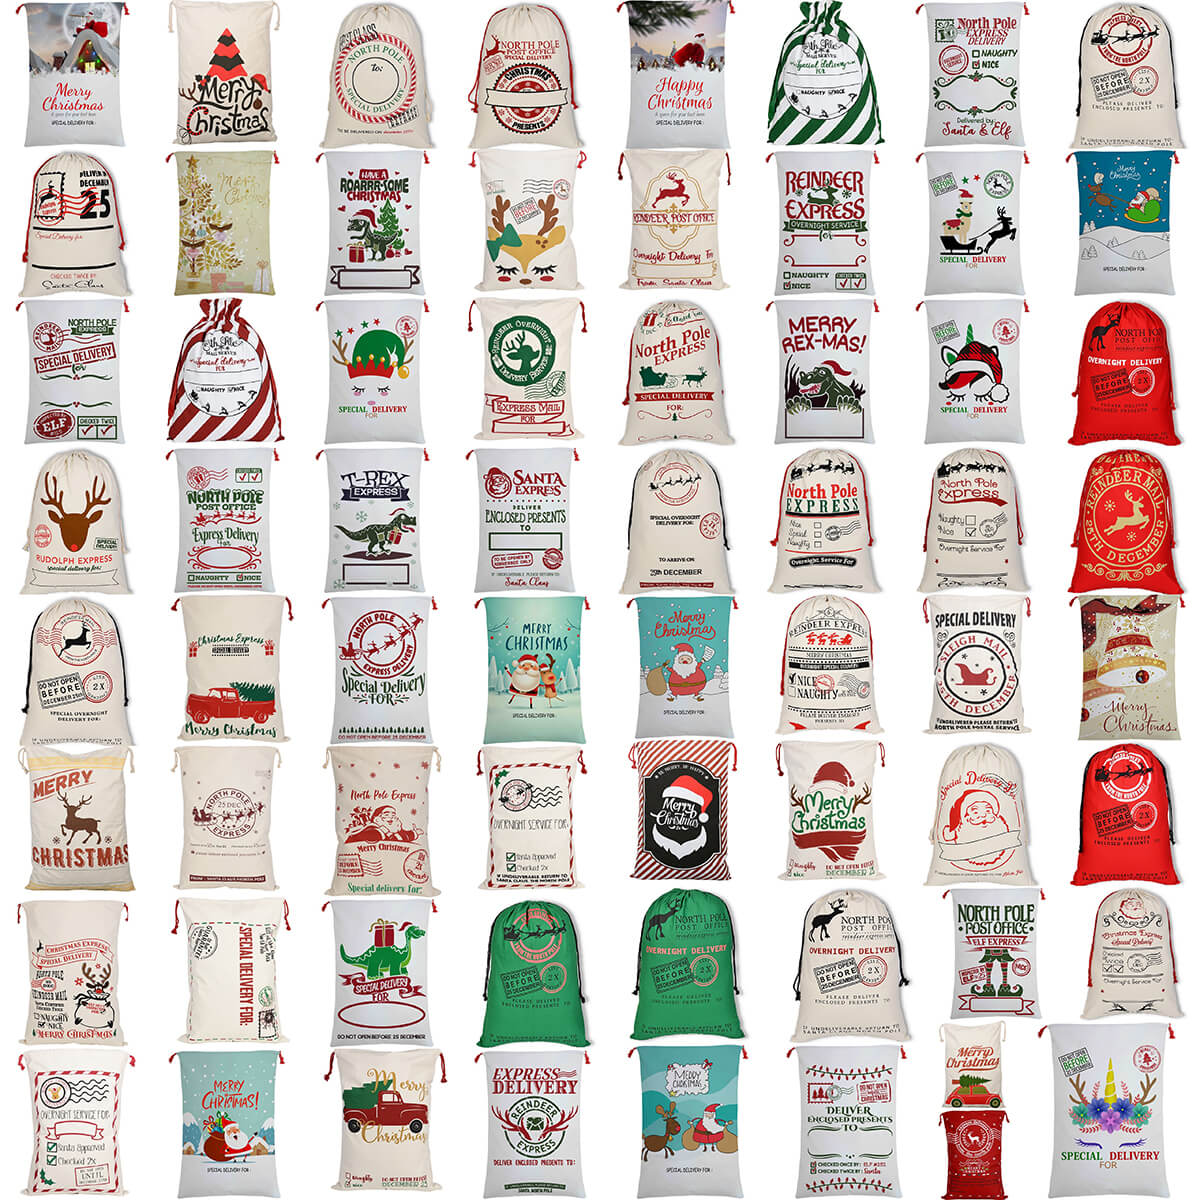 Large Christmas XMAS Hessian Santa Sack Stocking Bag Reindeer Children Gifts Bag, Red - Reindeer Express Delivery - SILBERSHELL